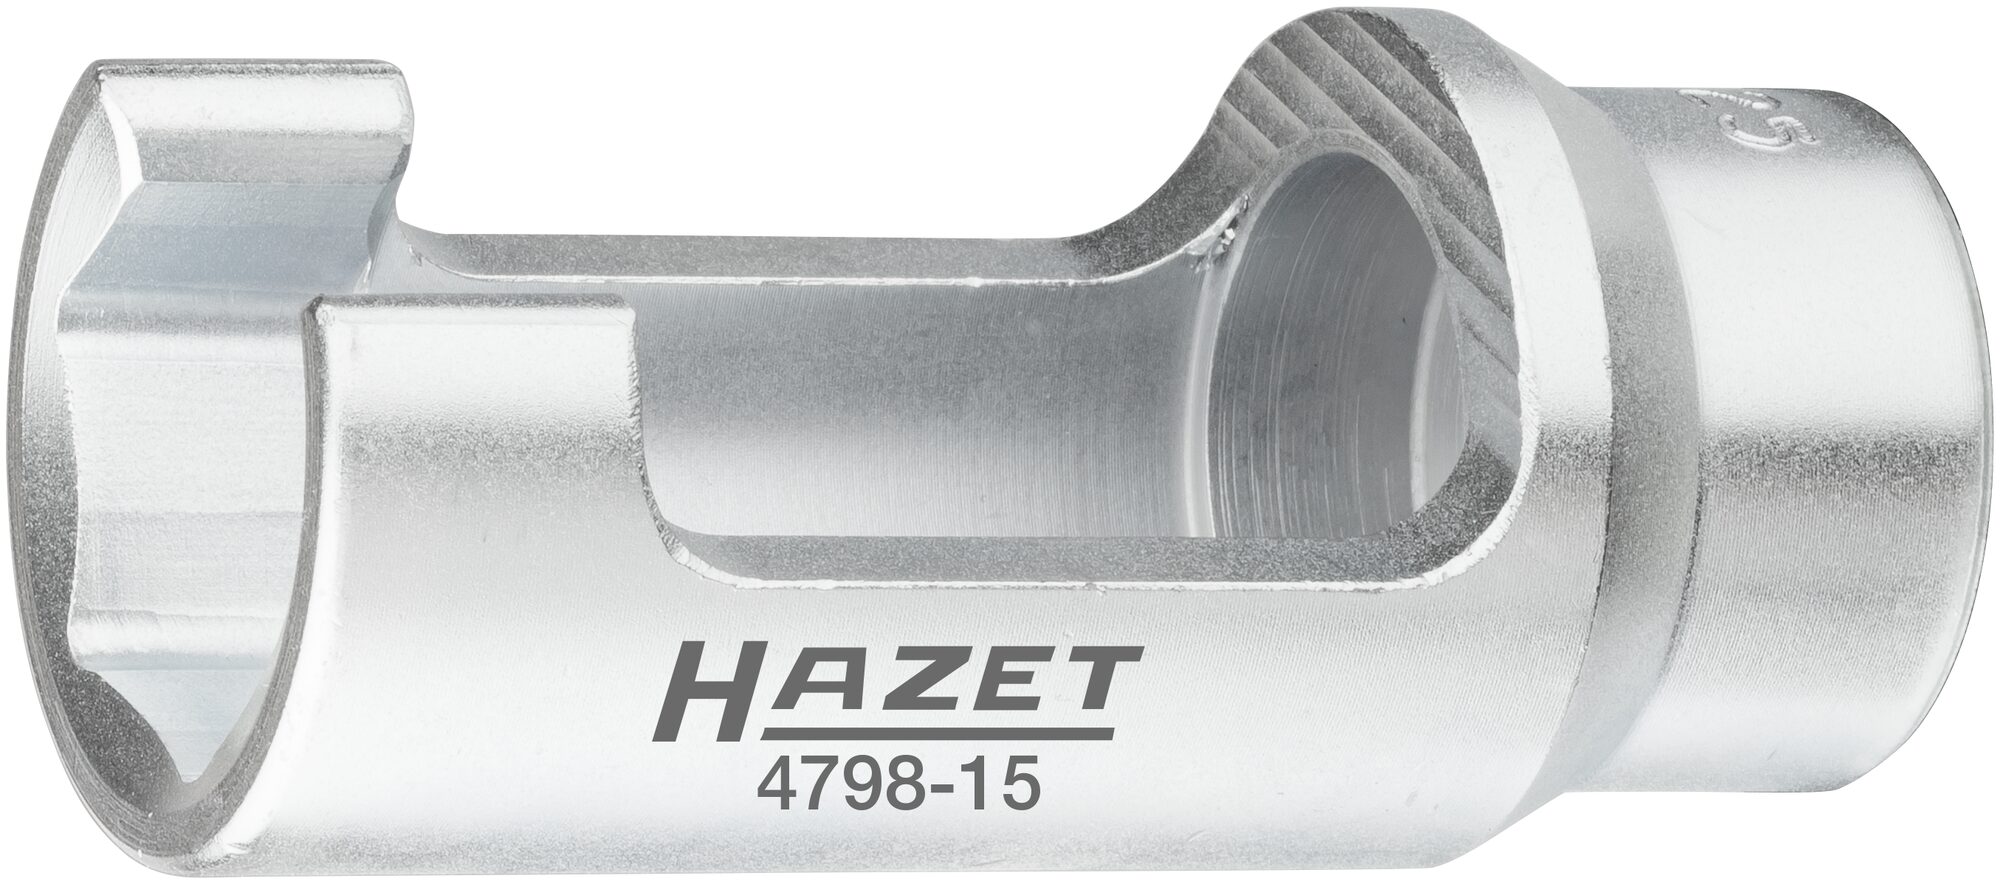 HAZET Injektor Steckschlüsseleinsatz Siemens s 25 mm 4798-15 · Vierkant hohl 12,5 mm (1/2 Zoll) · Außen Sechskant Profil · 25 mm